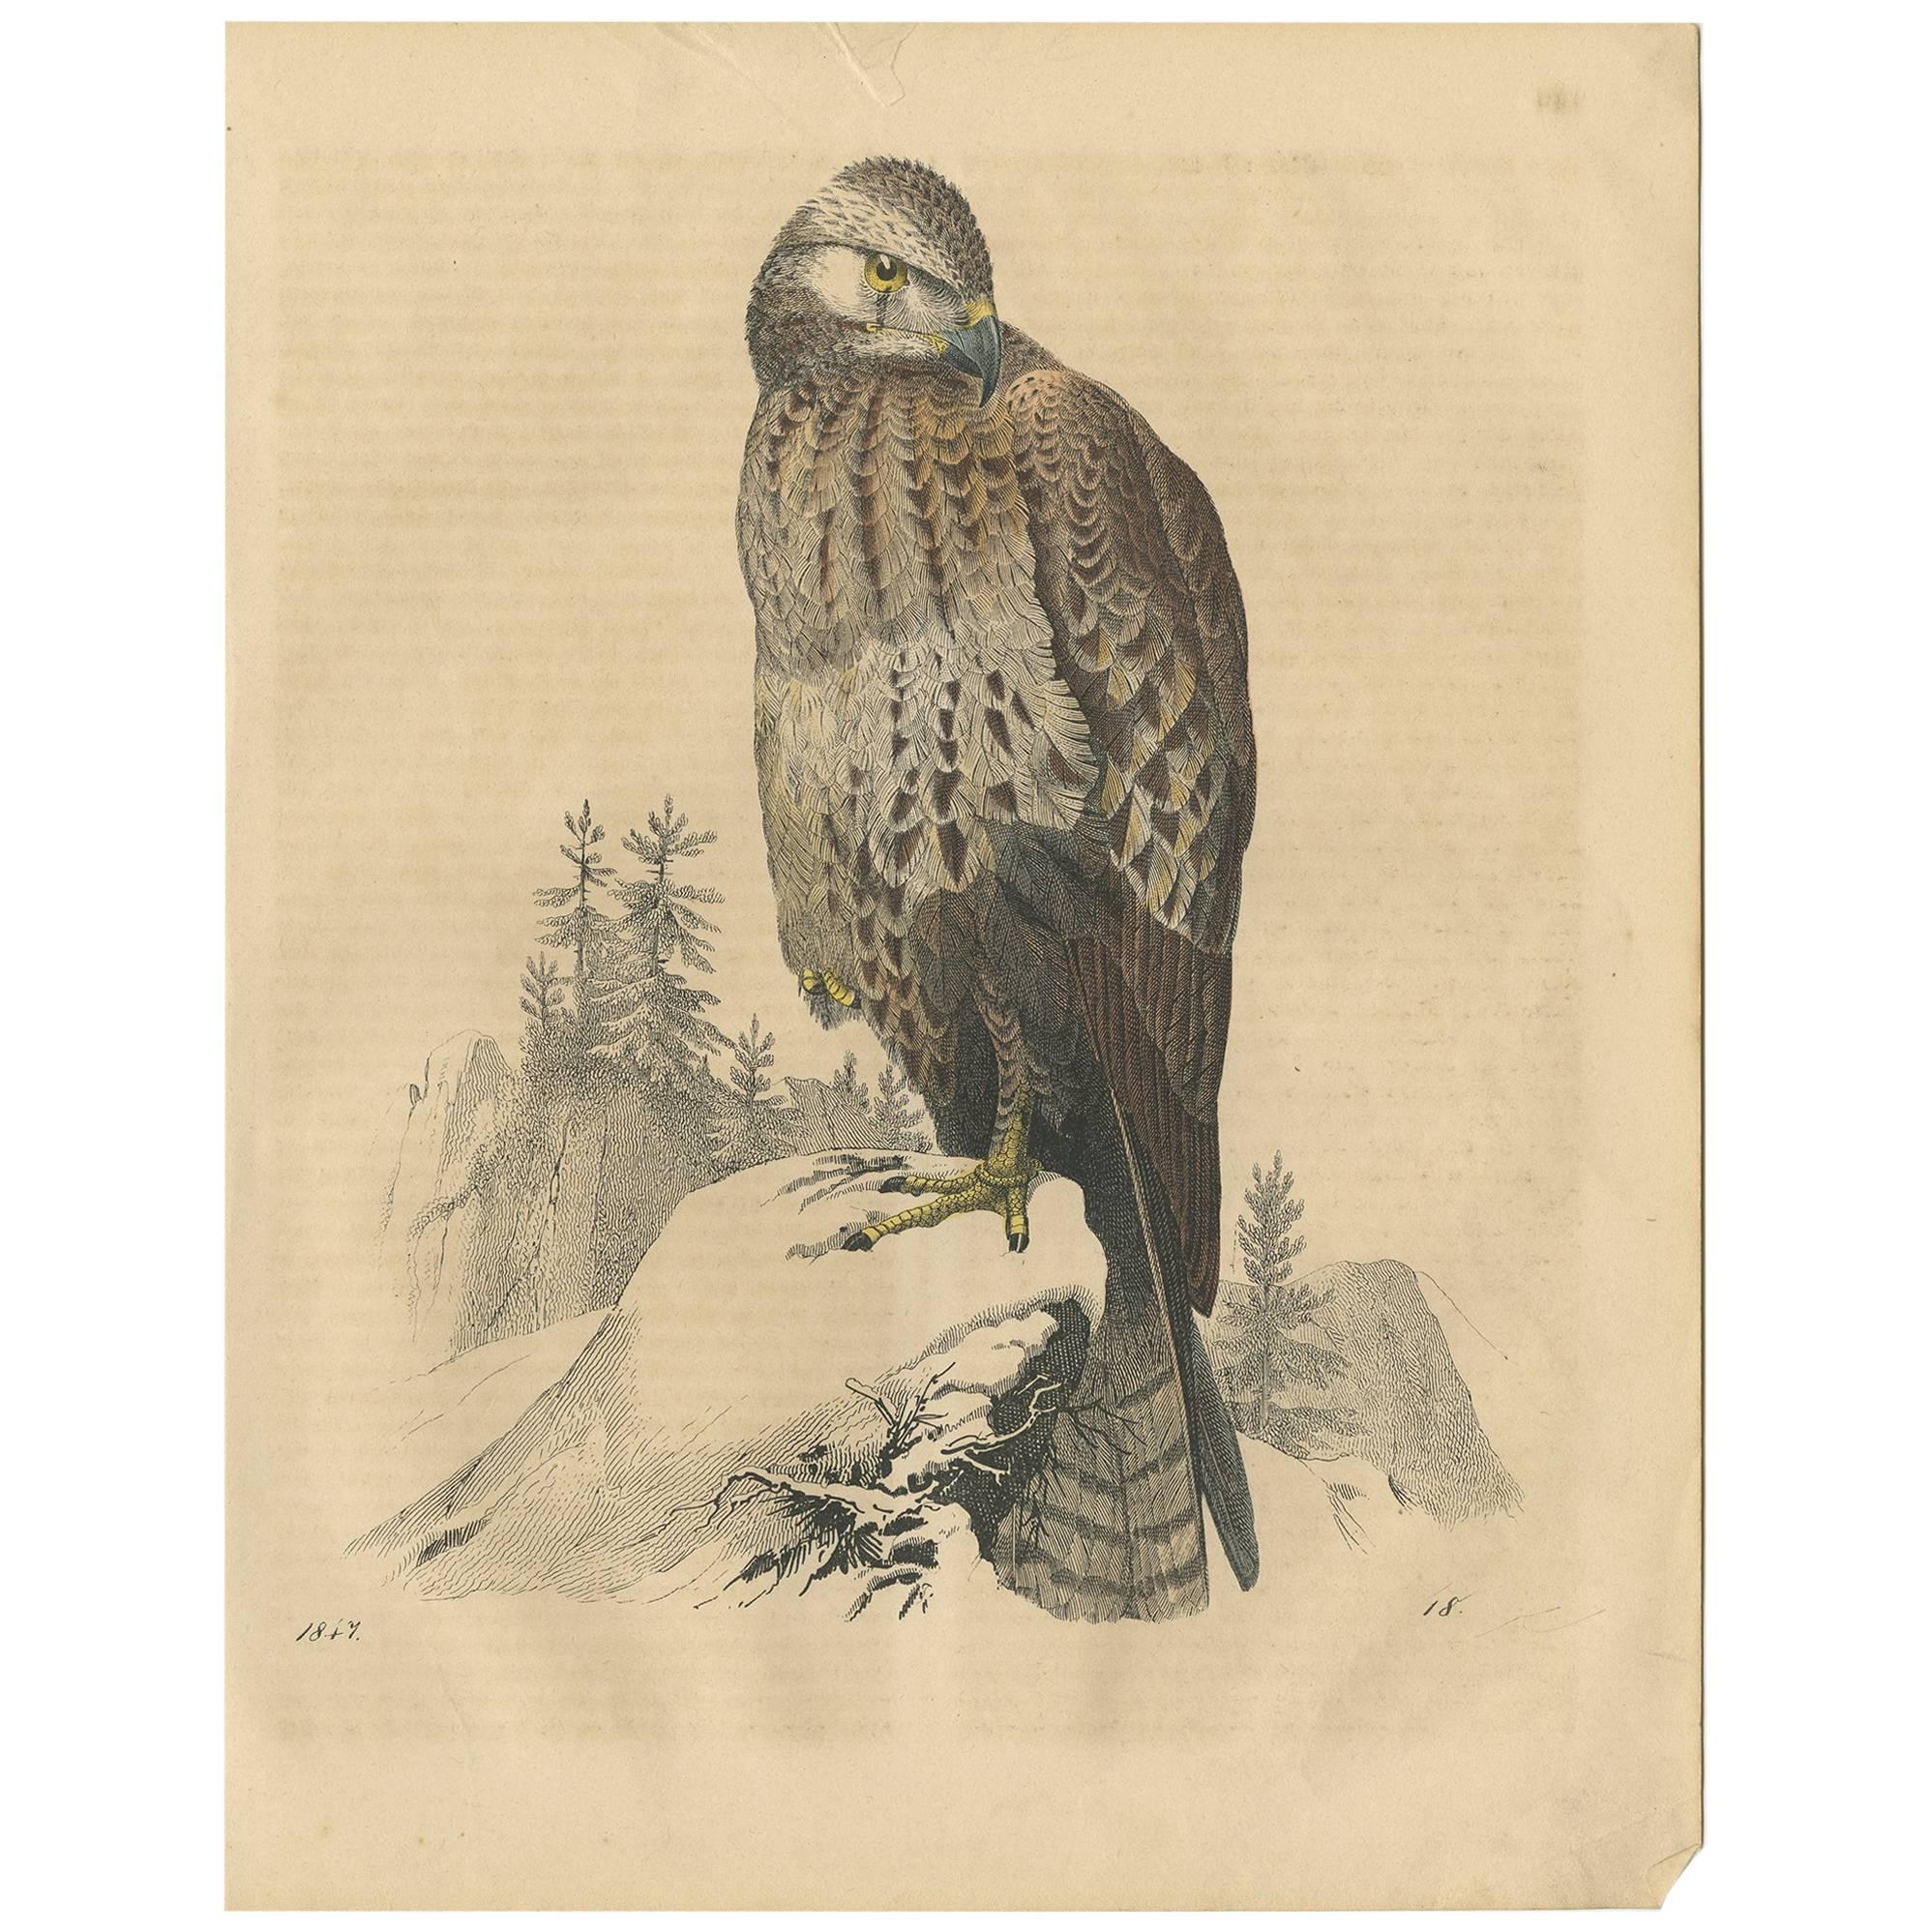 Antique Animal Print of a Buzzard 'Bird of Prey' by C. Hoffmann, 1847